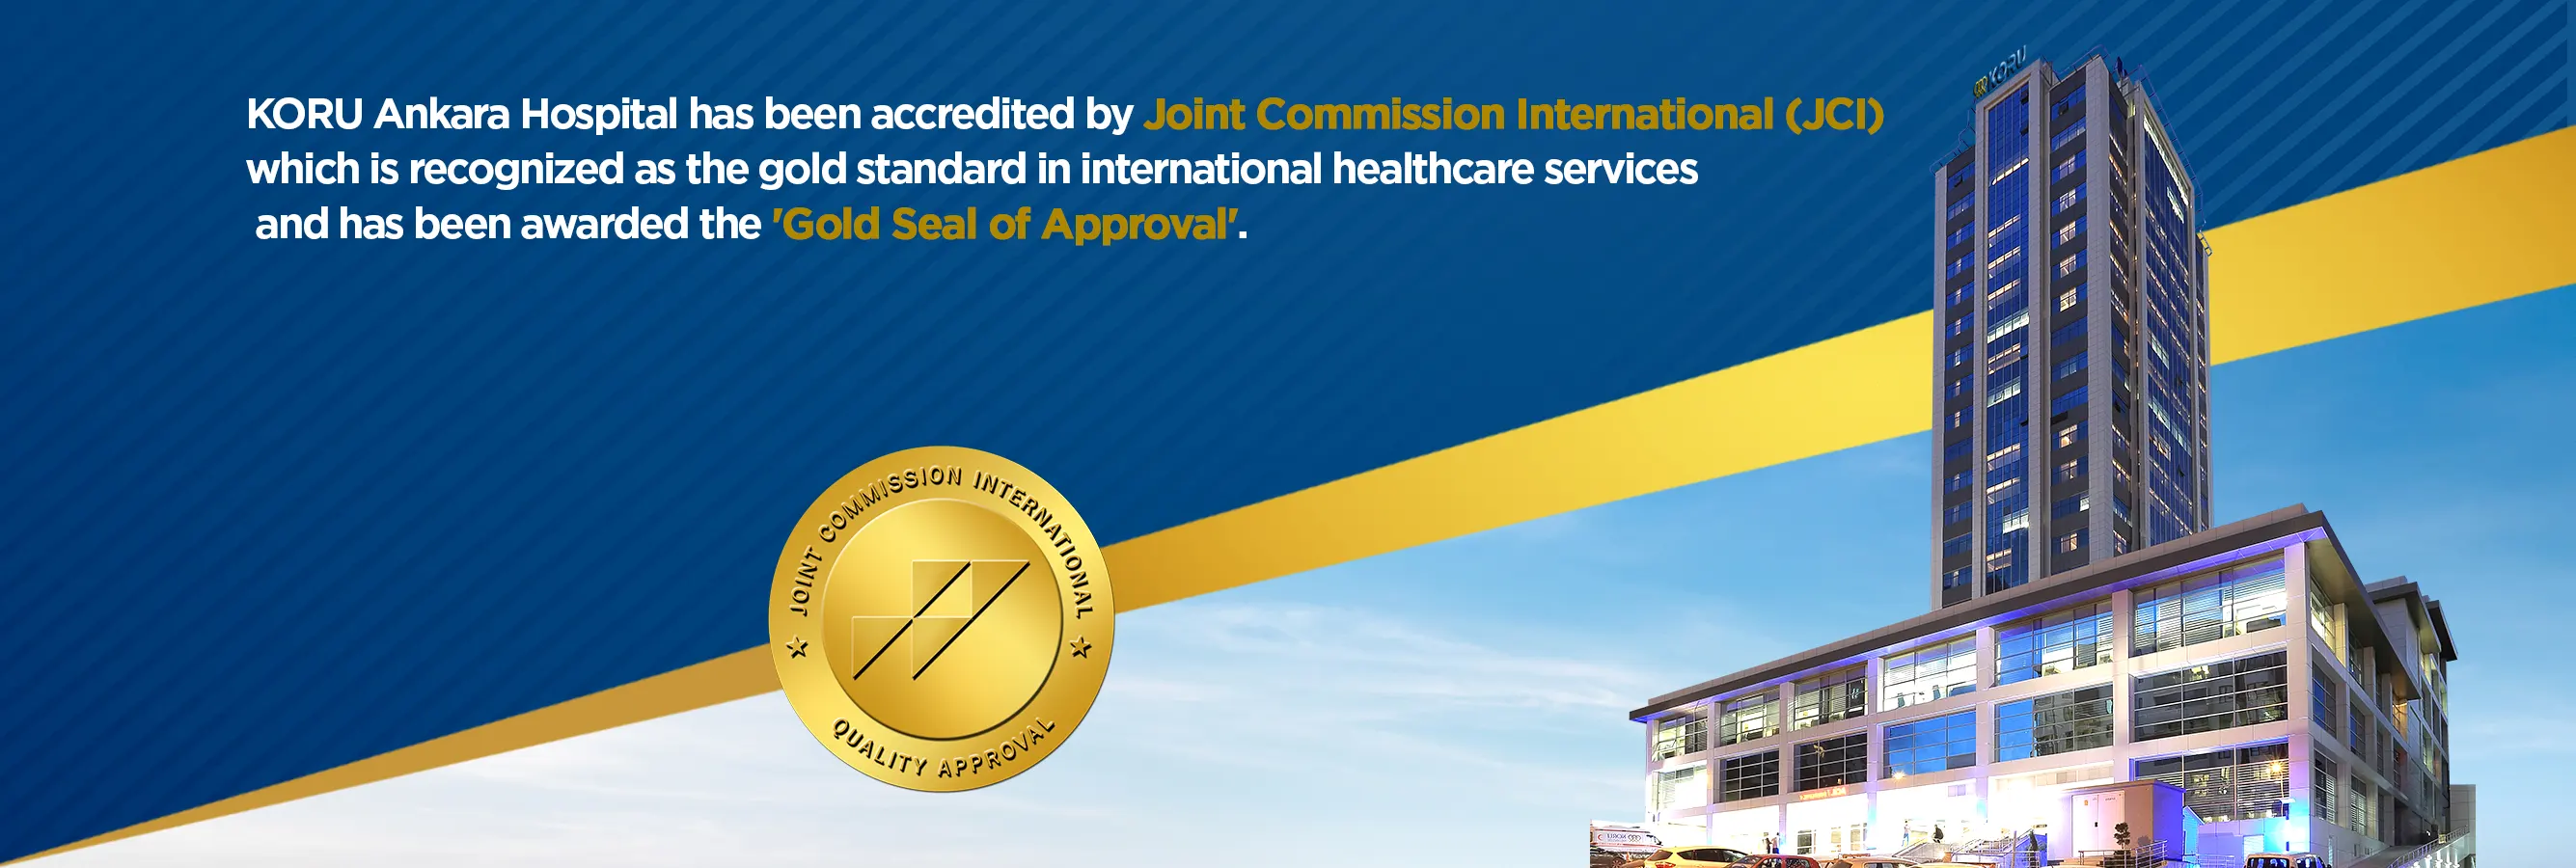 JCI (Joint Commission International) - EN